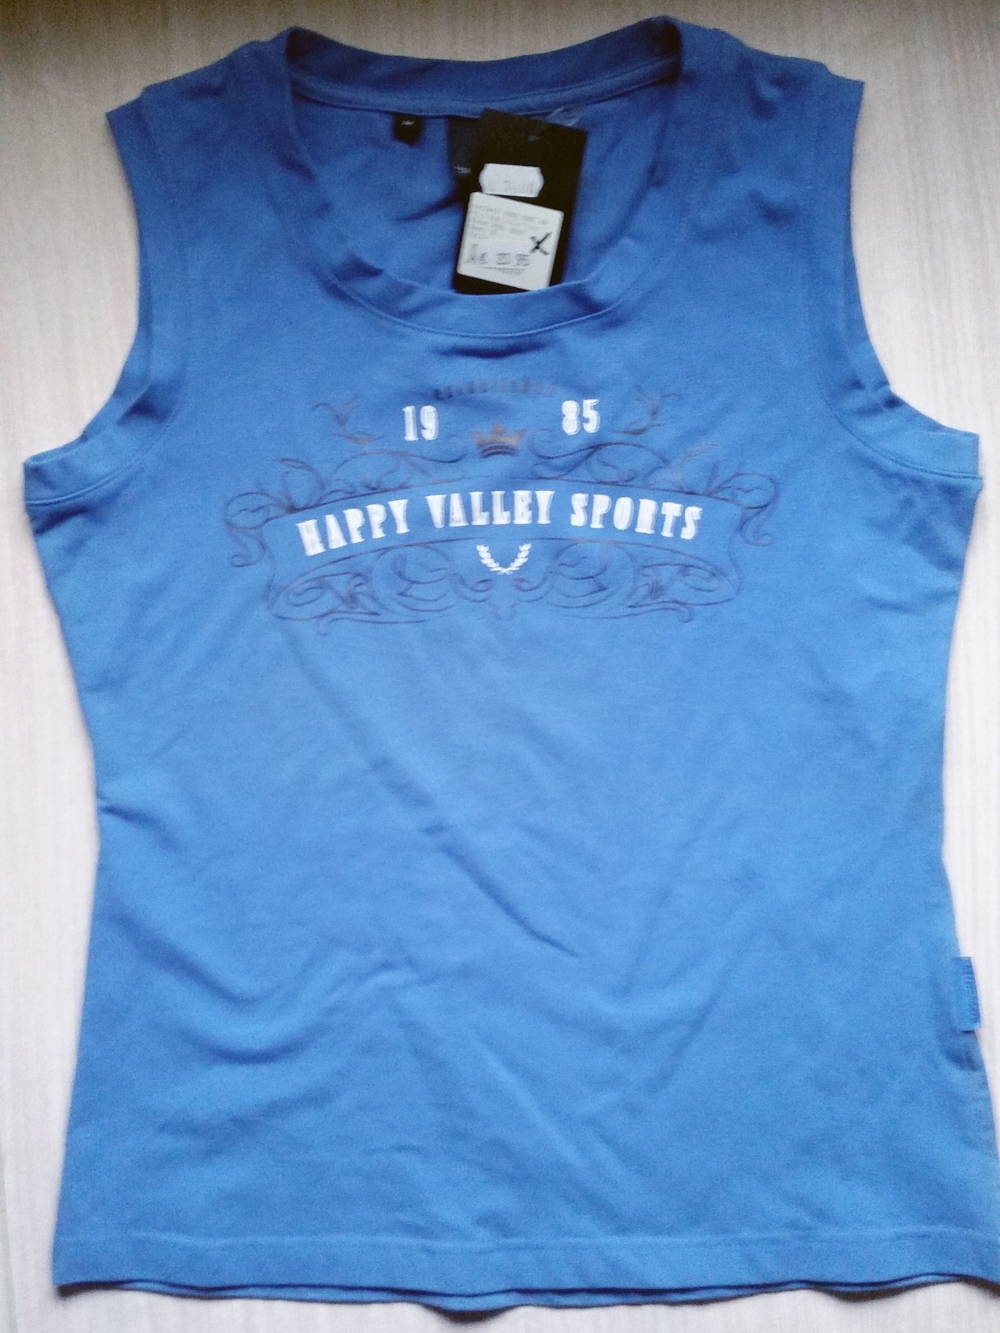 Shirt ärmellos, Marke: Happy Valley, Farbe: Blau, Größe: M, neu